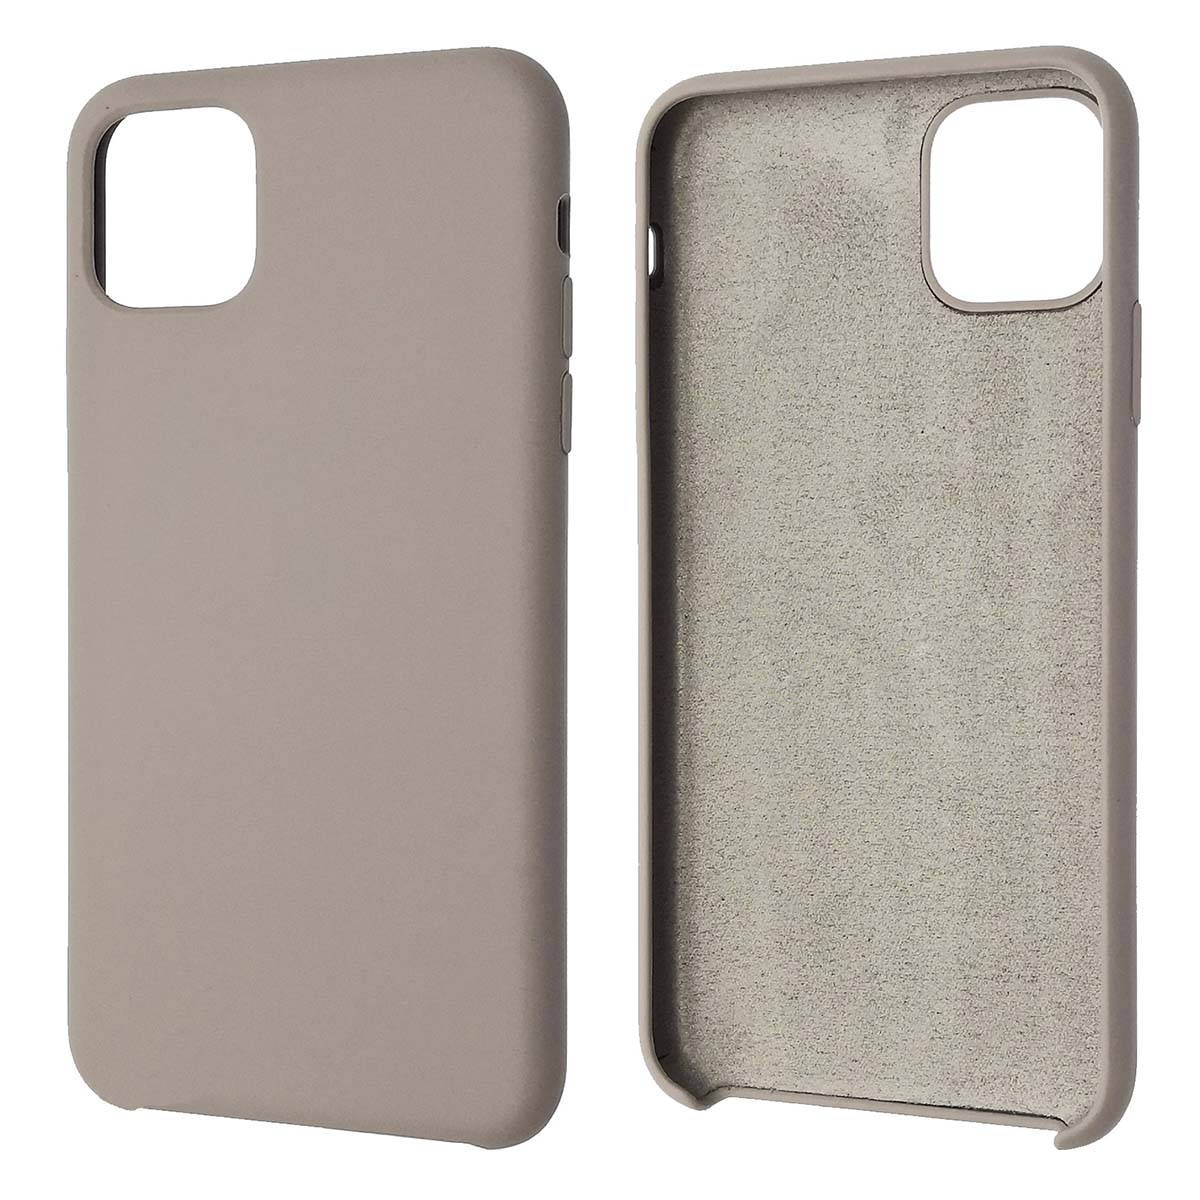 Чехол накладка Silicon Case для APPLE iPhone 11 Pro MAX 2019, силикон, бархат, цвет темно серый